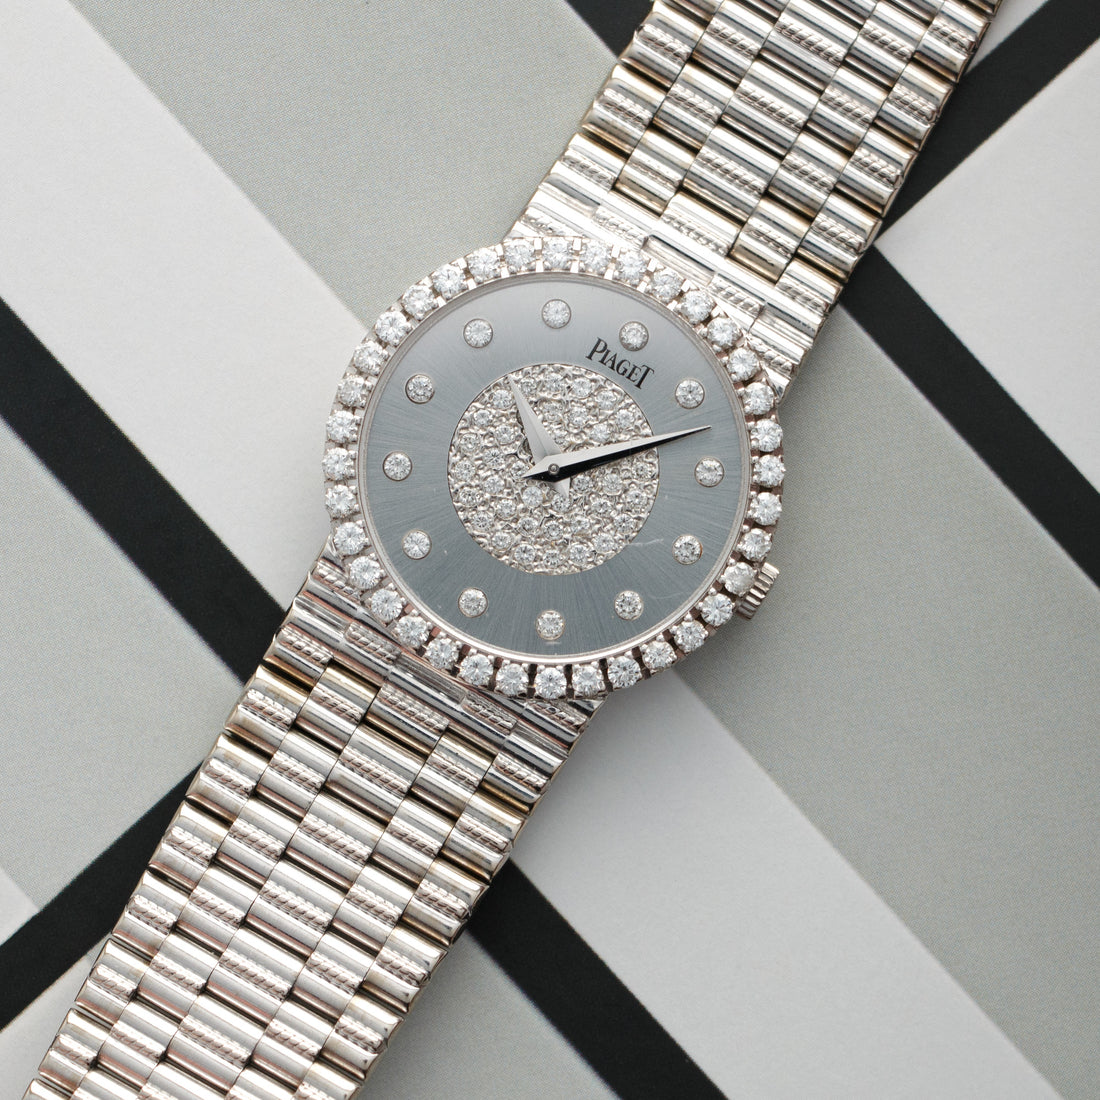 Piaget White Gold Diamond Watch, 1970s